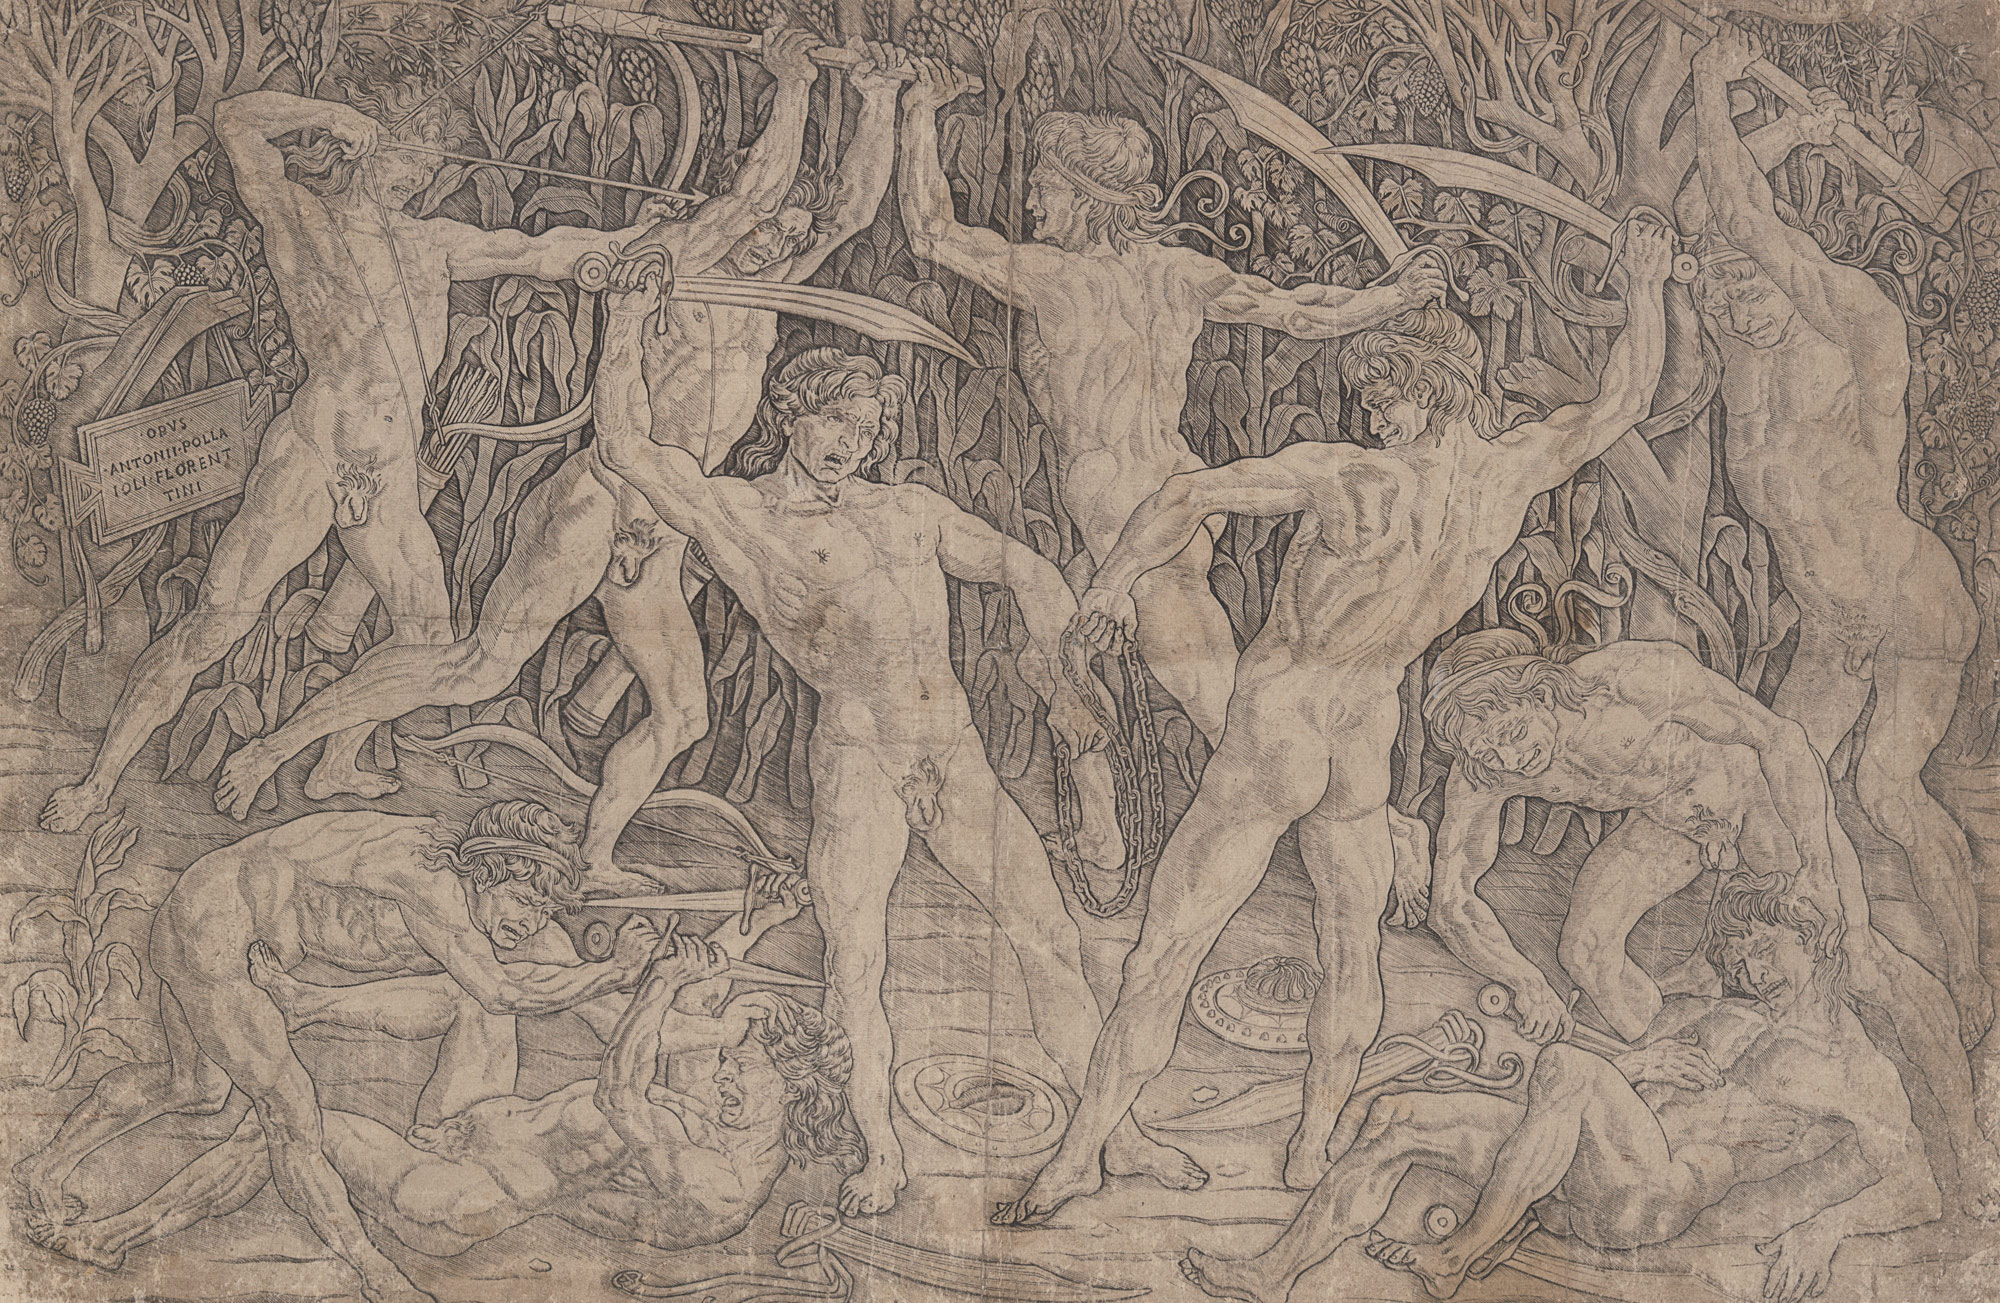 Battle of Naked Men 1465 Antonio Pollaiuolo Italian Florentine